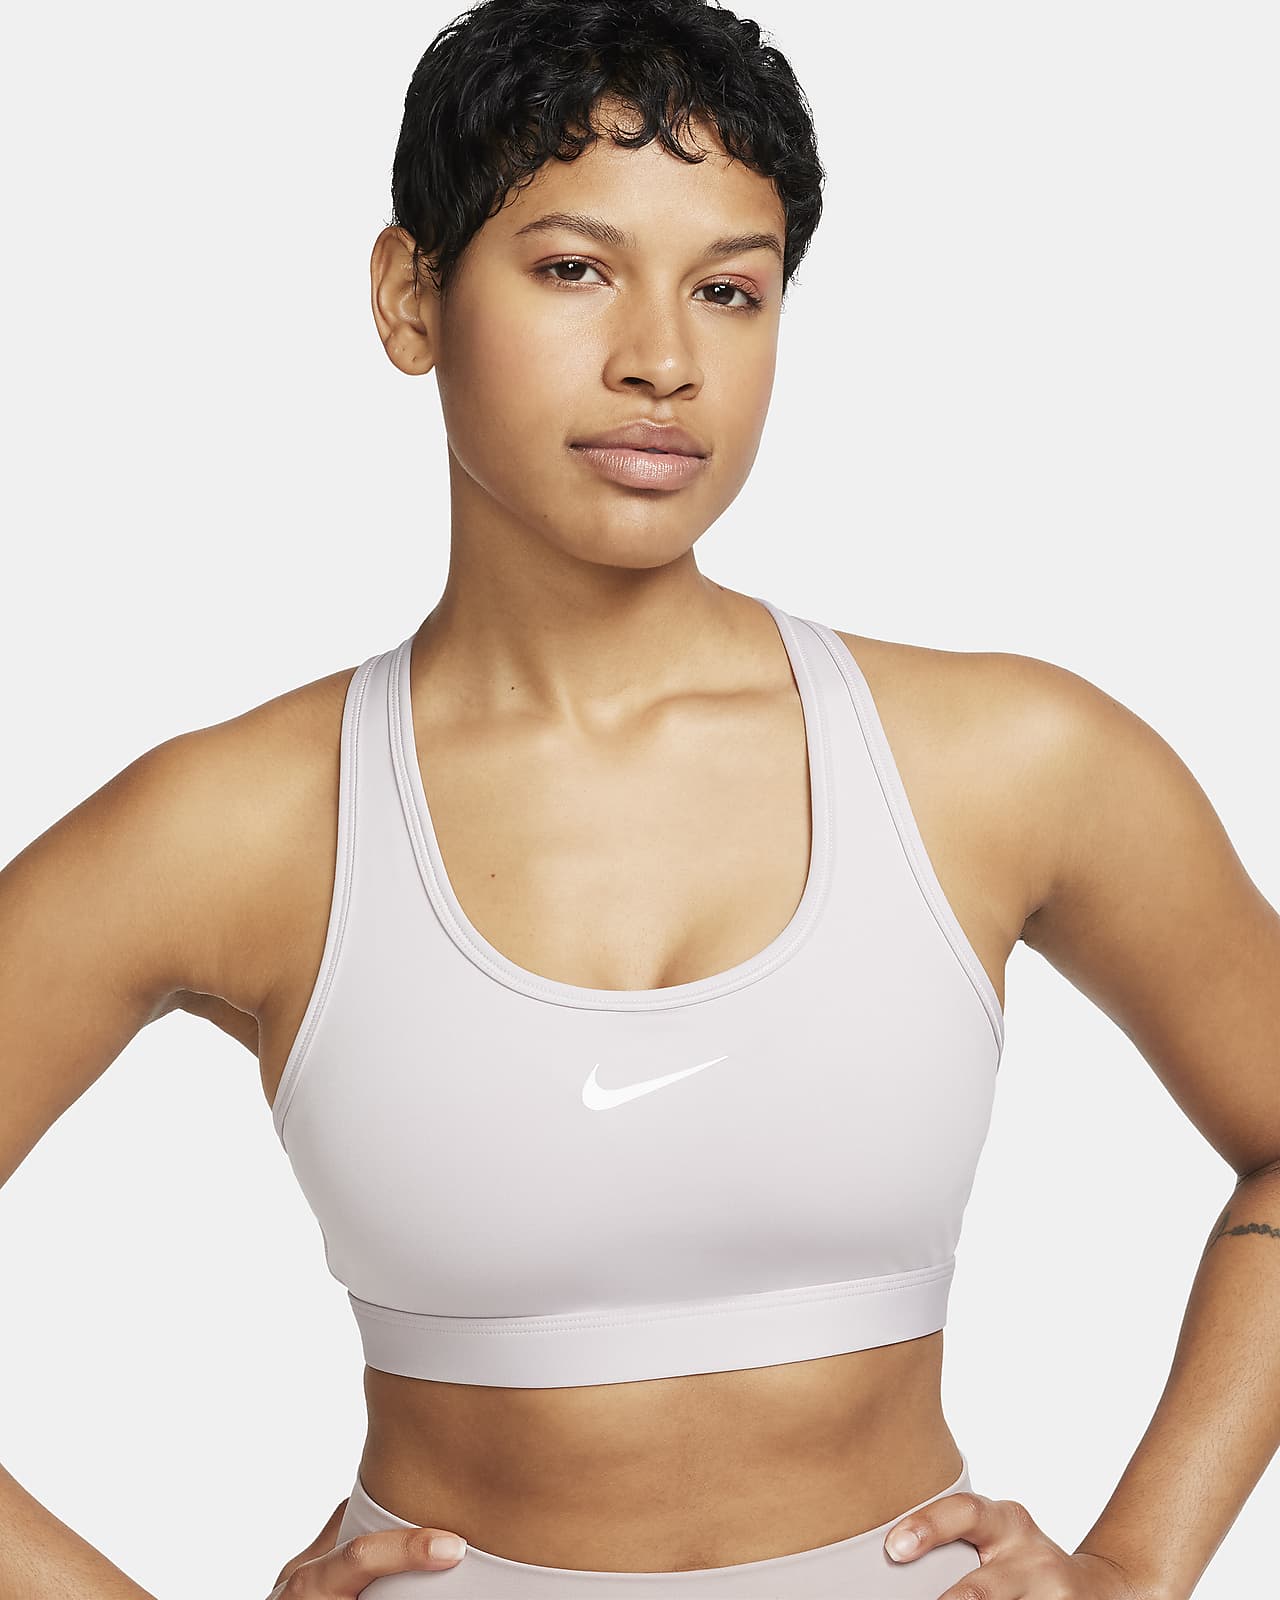 Buy Youloveit One Shoulder Sports Bras for Women Medium Support